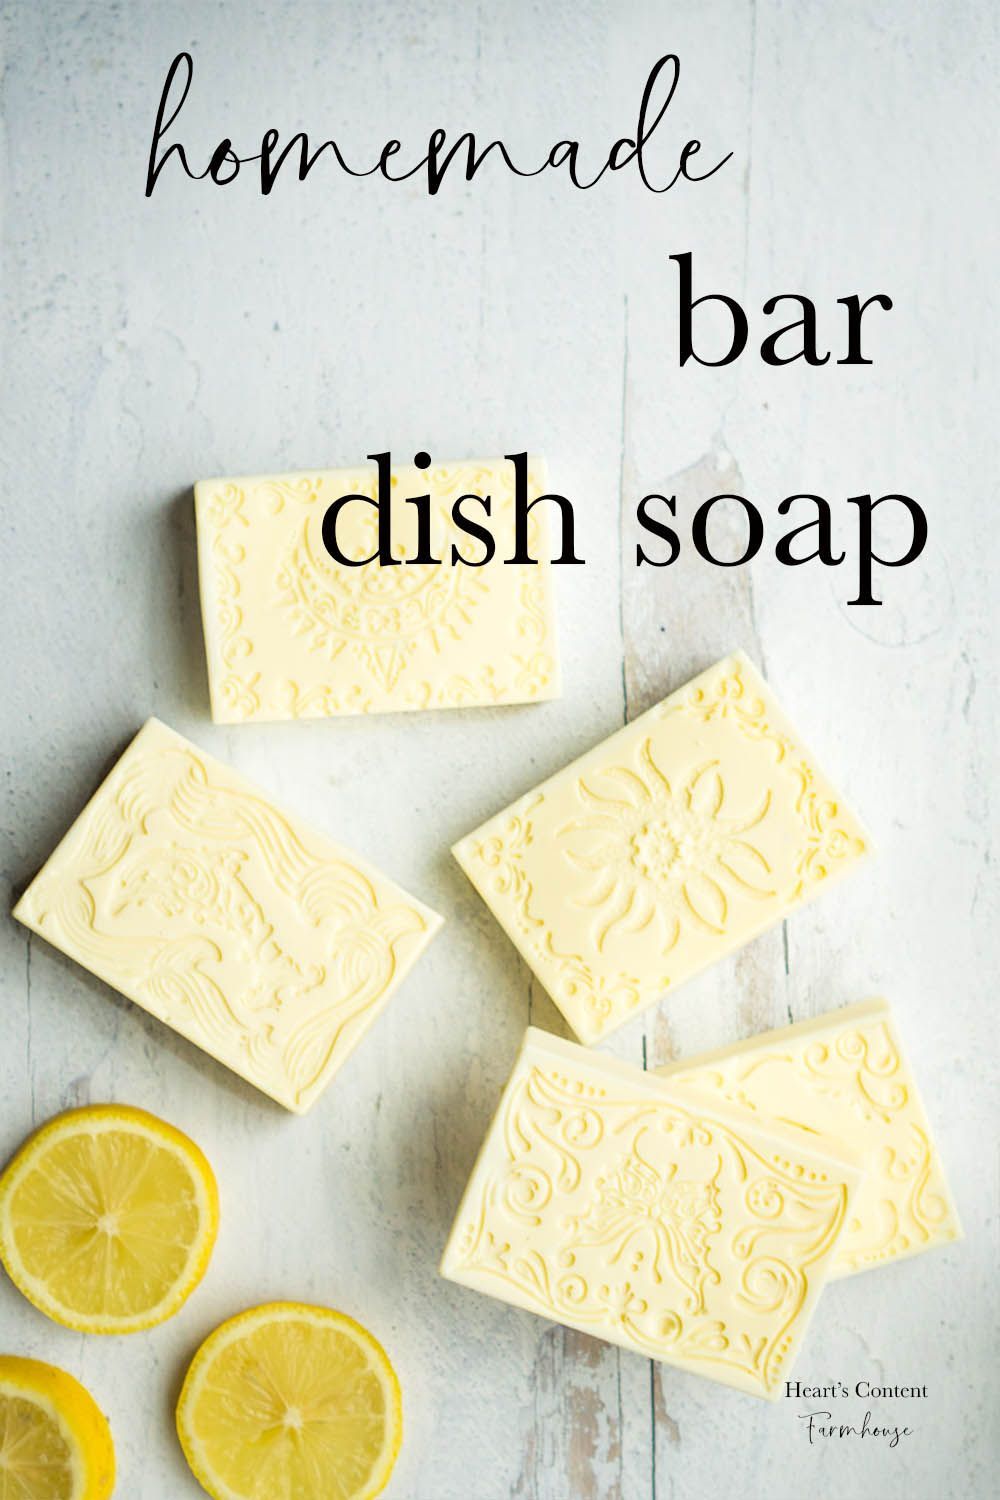 Homemade Bar Dish Soap - Homemade Bar Dish Soap -   16 beauty Bar soap ideas